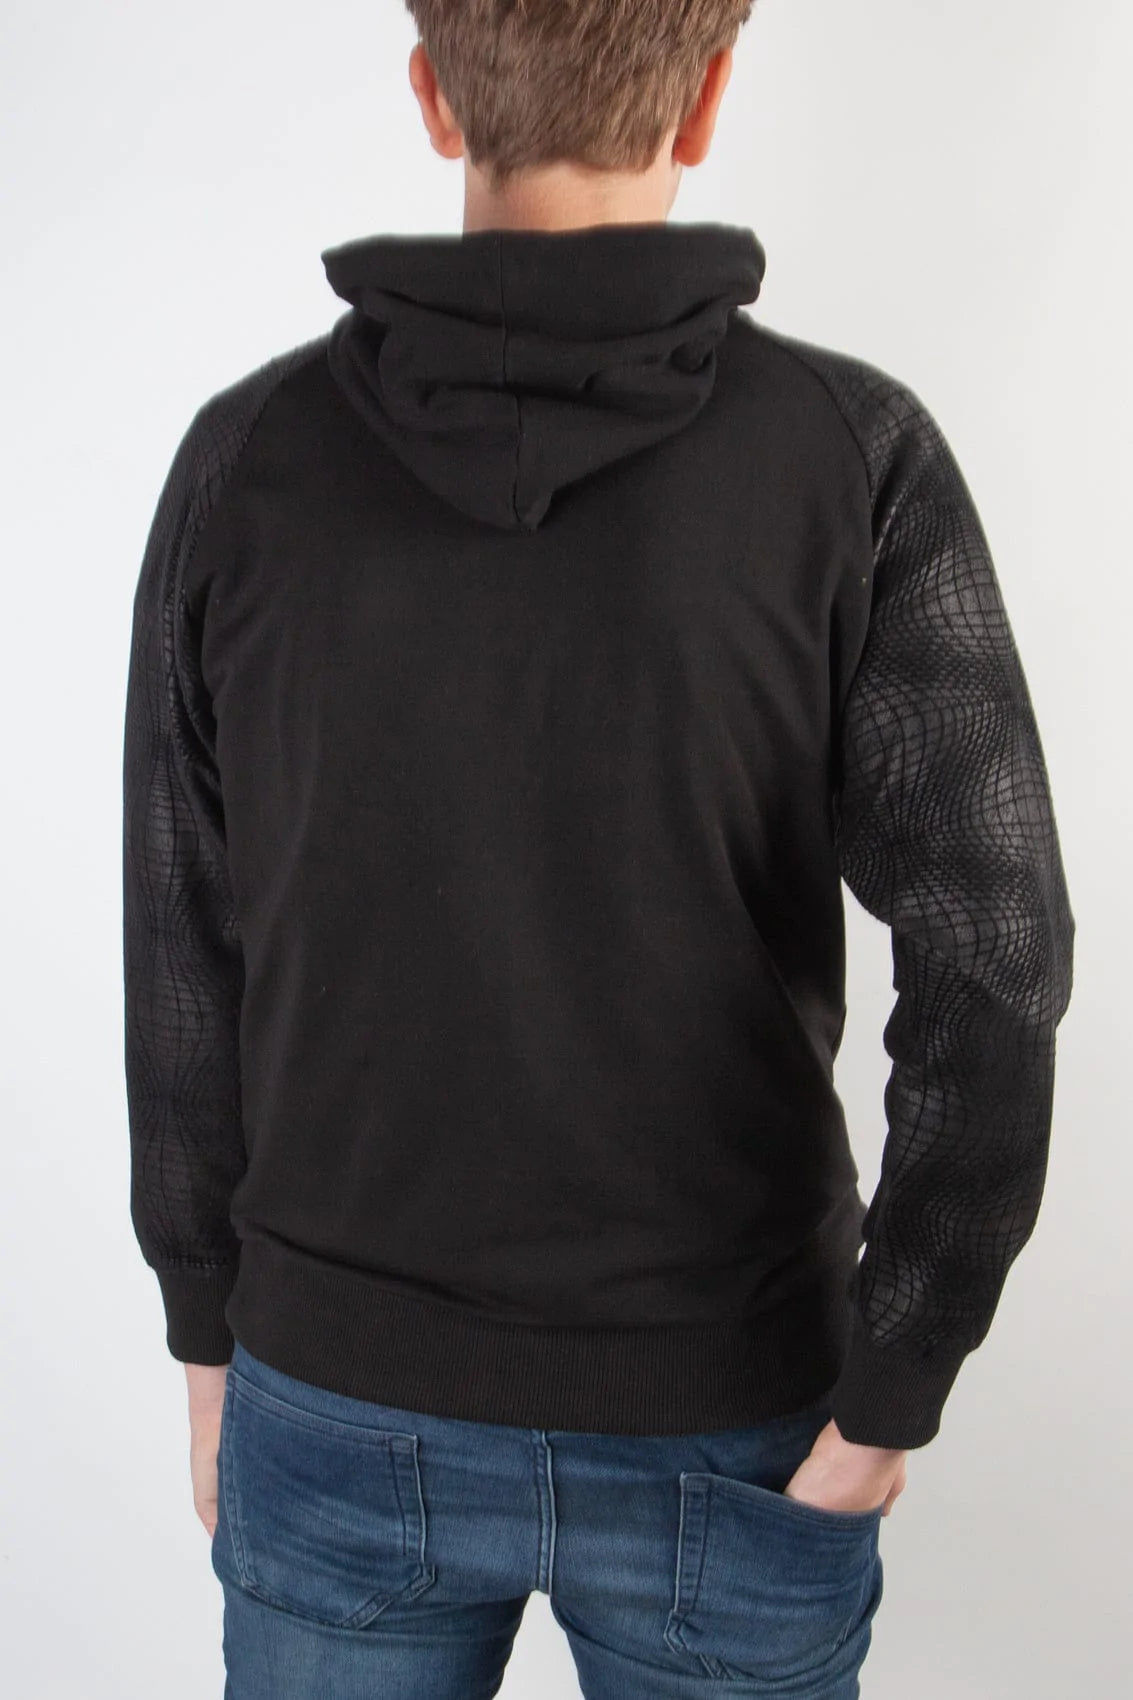 Top GunSweatshirt with hood "Black Style" Logo